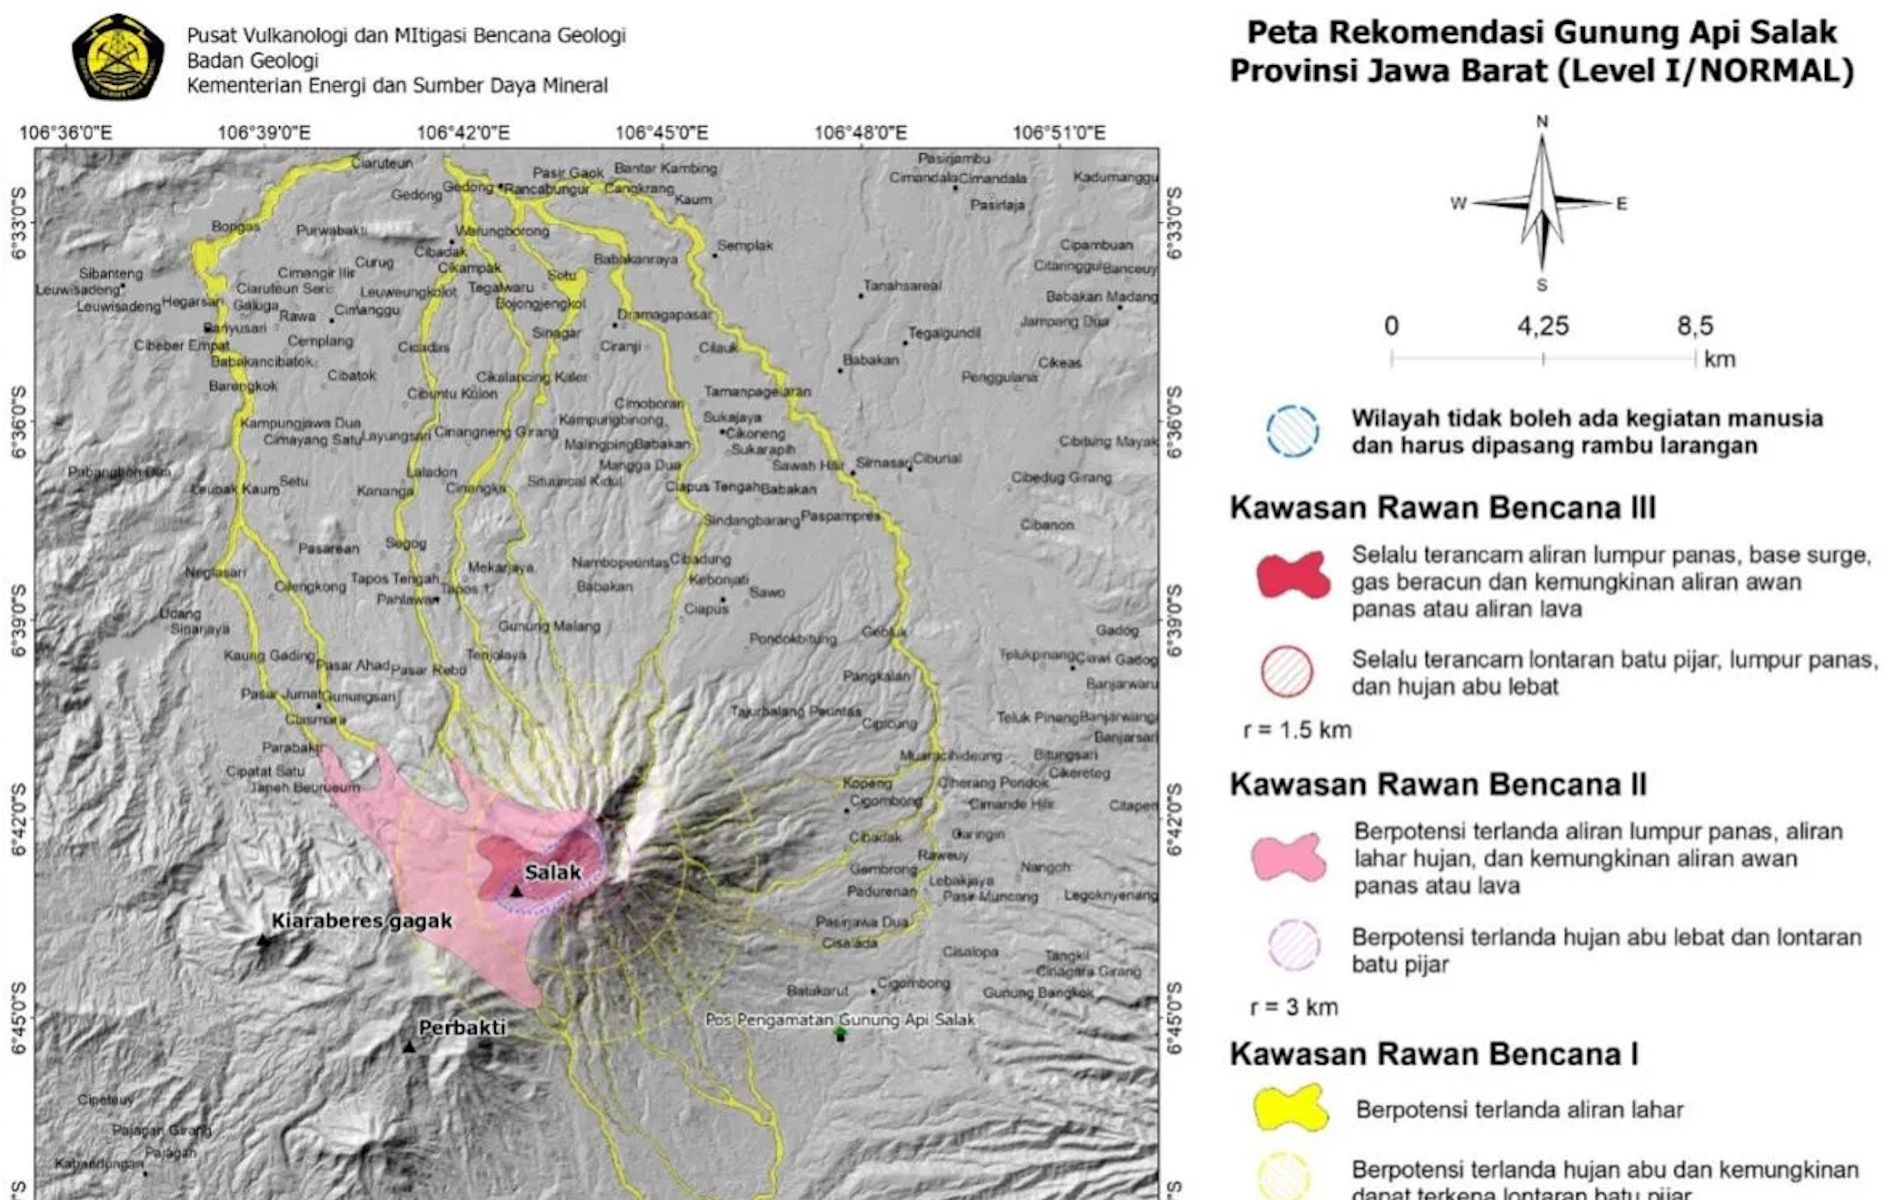 Peta kawasan rawan bencana di Gunung Salak yang berlokasi di Kabupaten Sukabumi dan Kabupaten Bogor, Provinsi Jawa Barat.